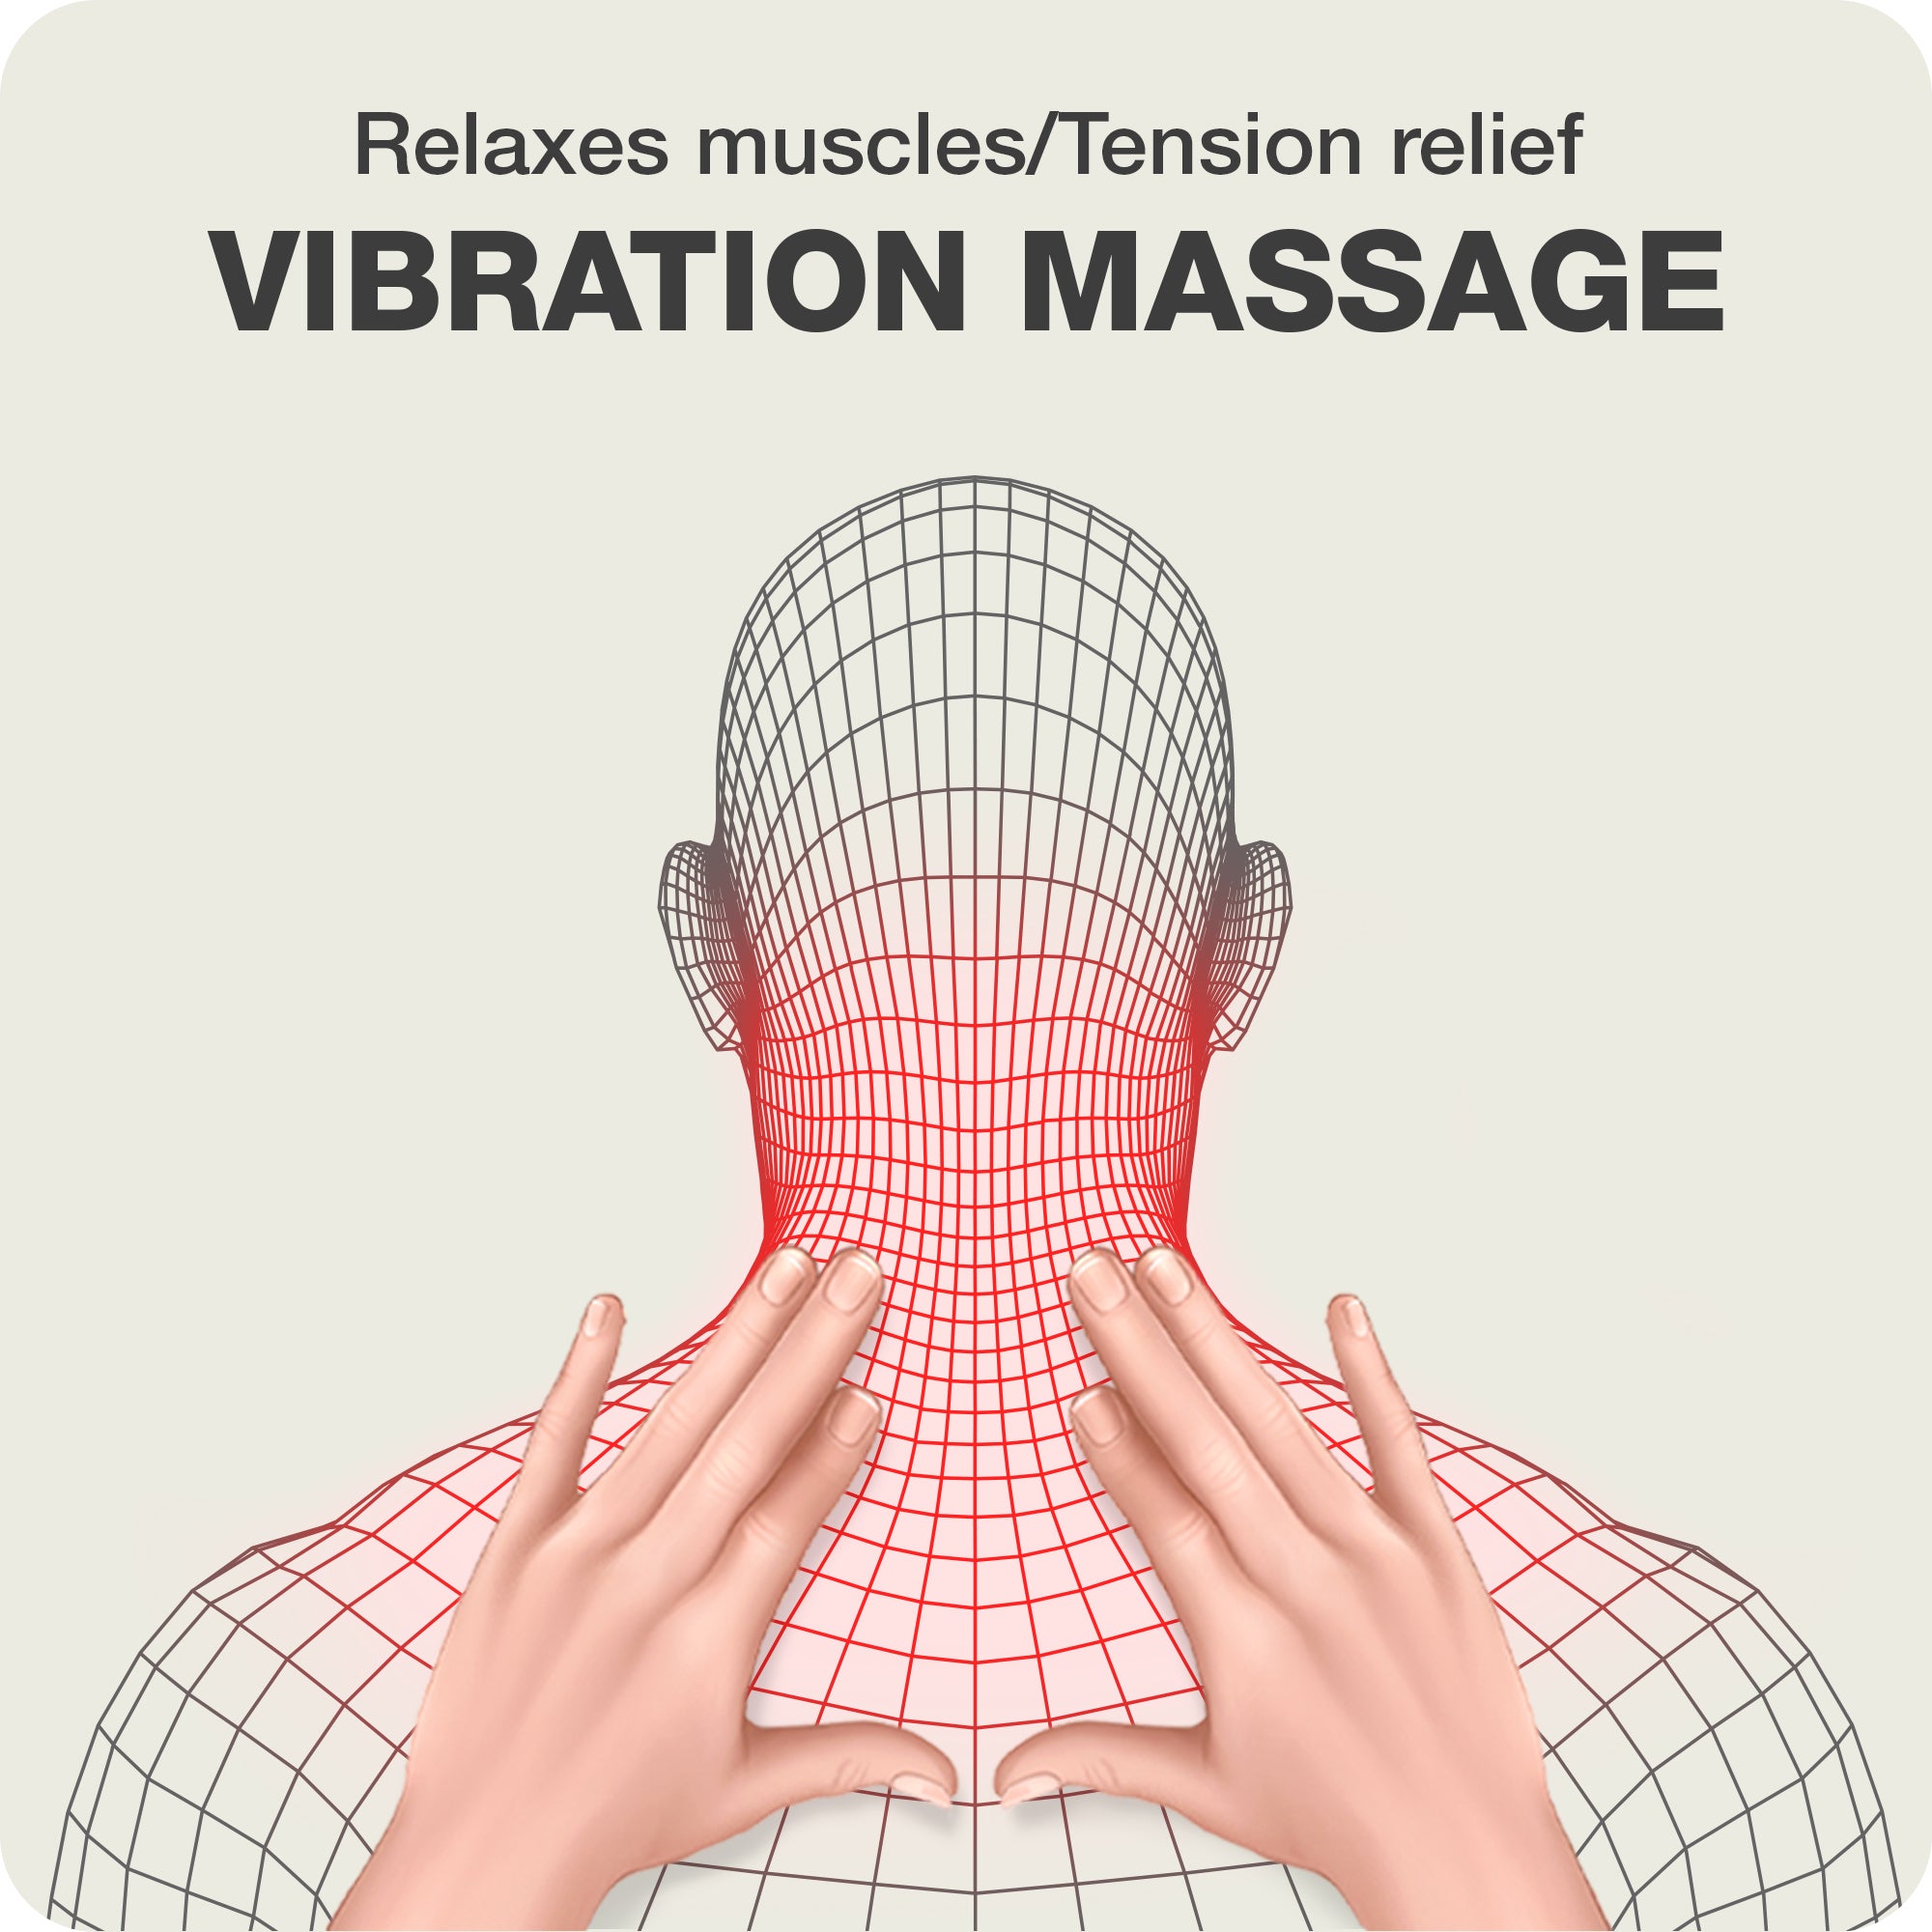 human hands performing vibration massage on shoulder muscle